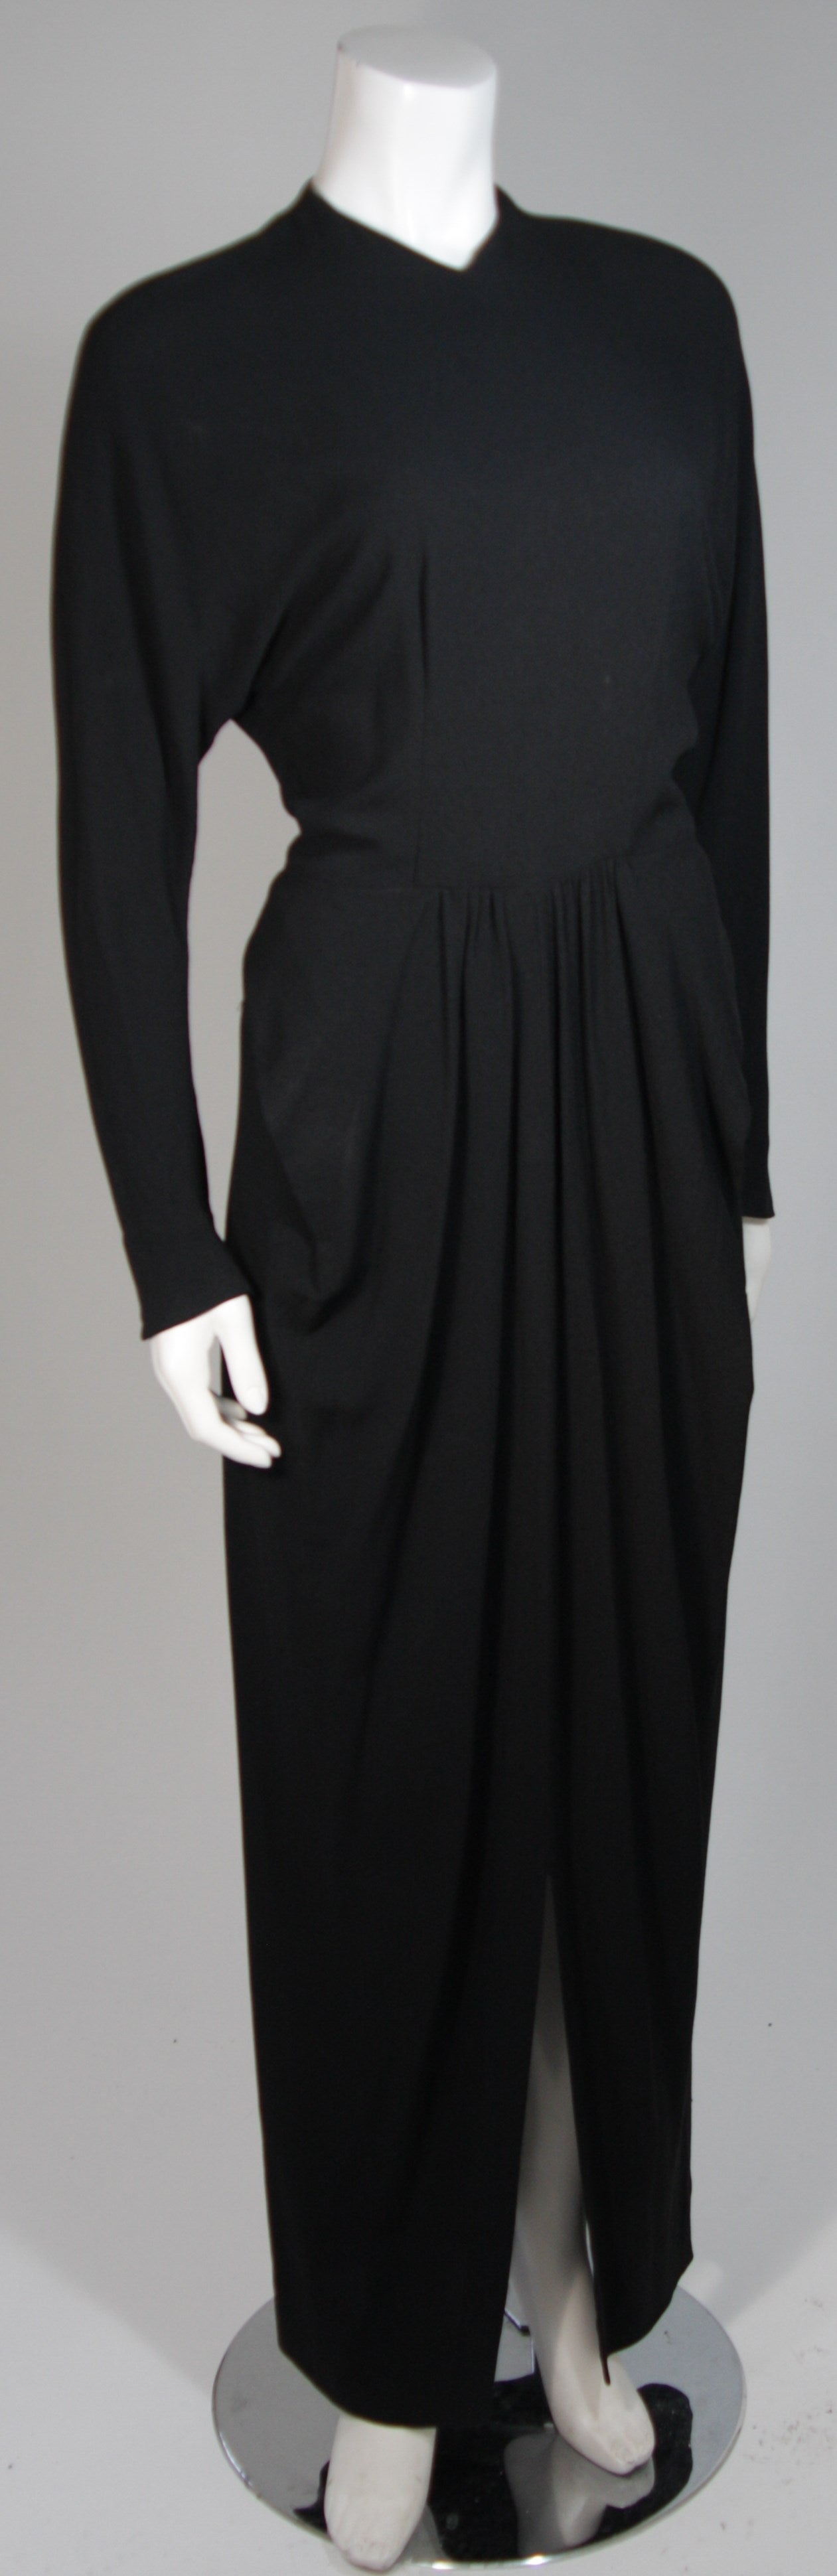 Women's Ceil Chapman Draped Black Silk Crepe Gown Size Small For Sale